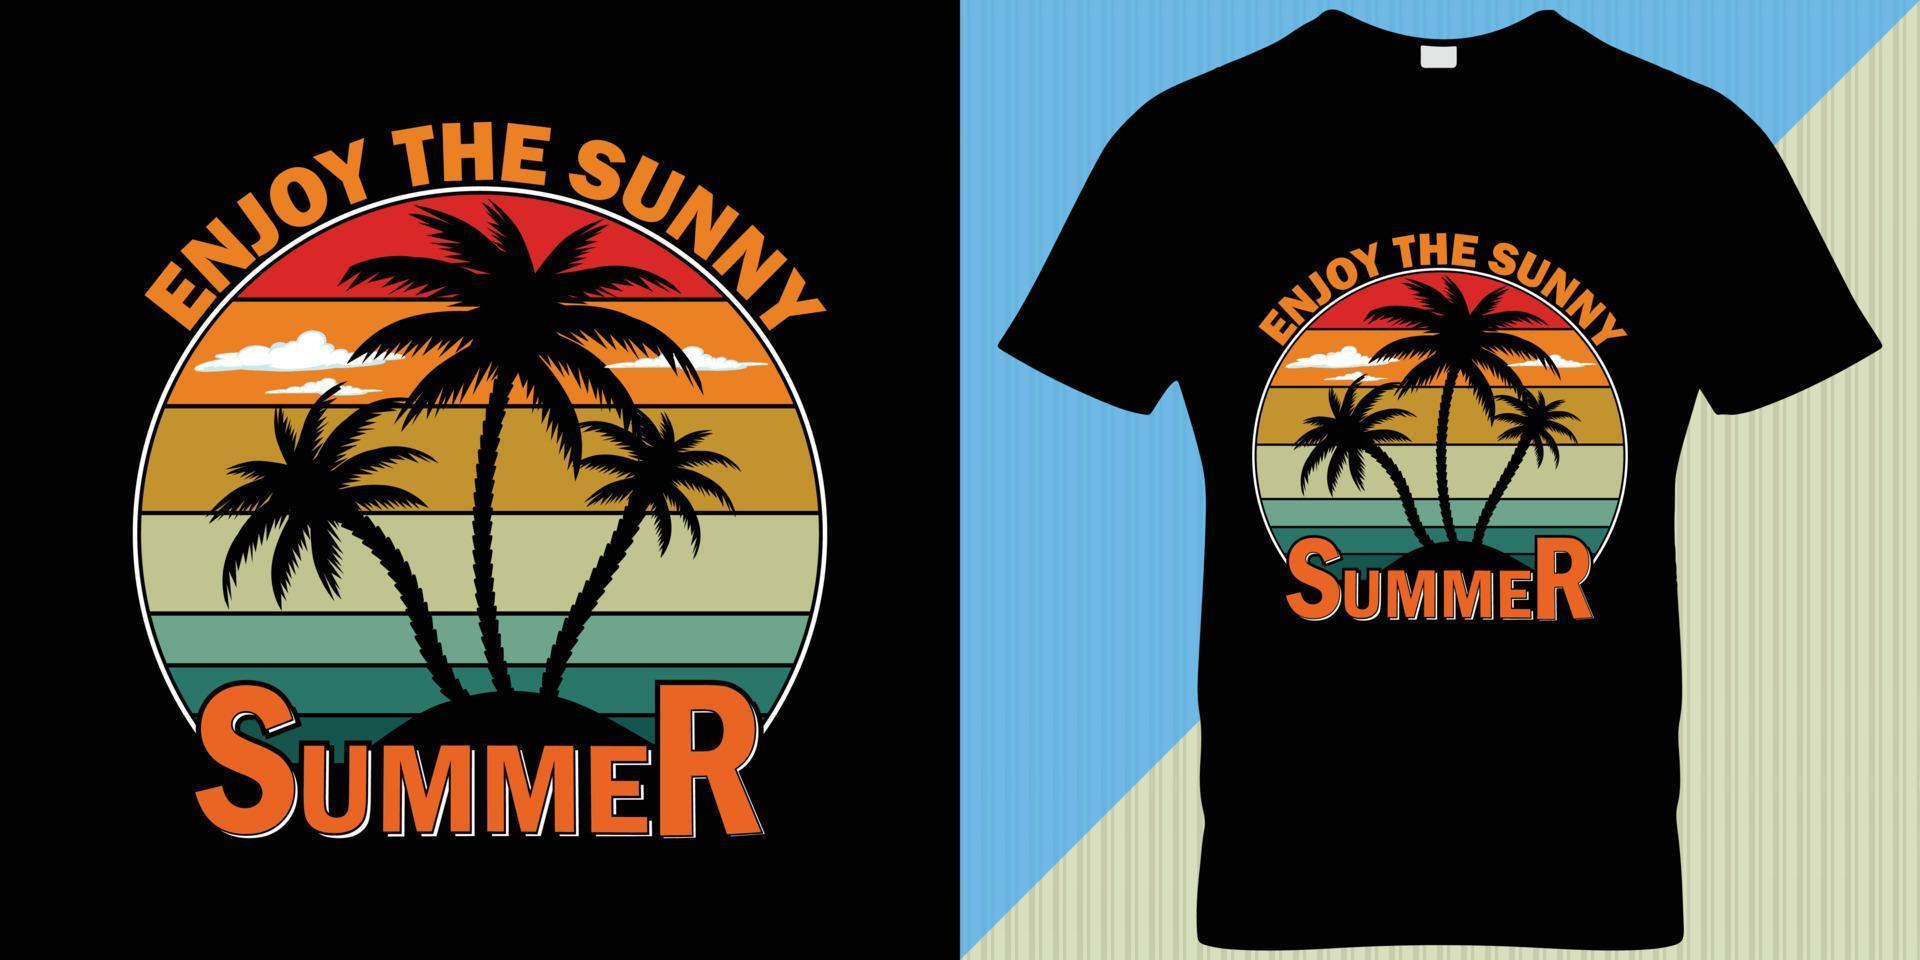 sommar säsong t-shirt design. vektor